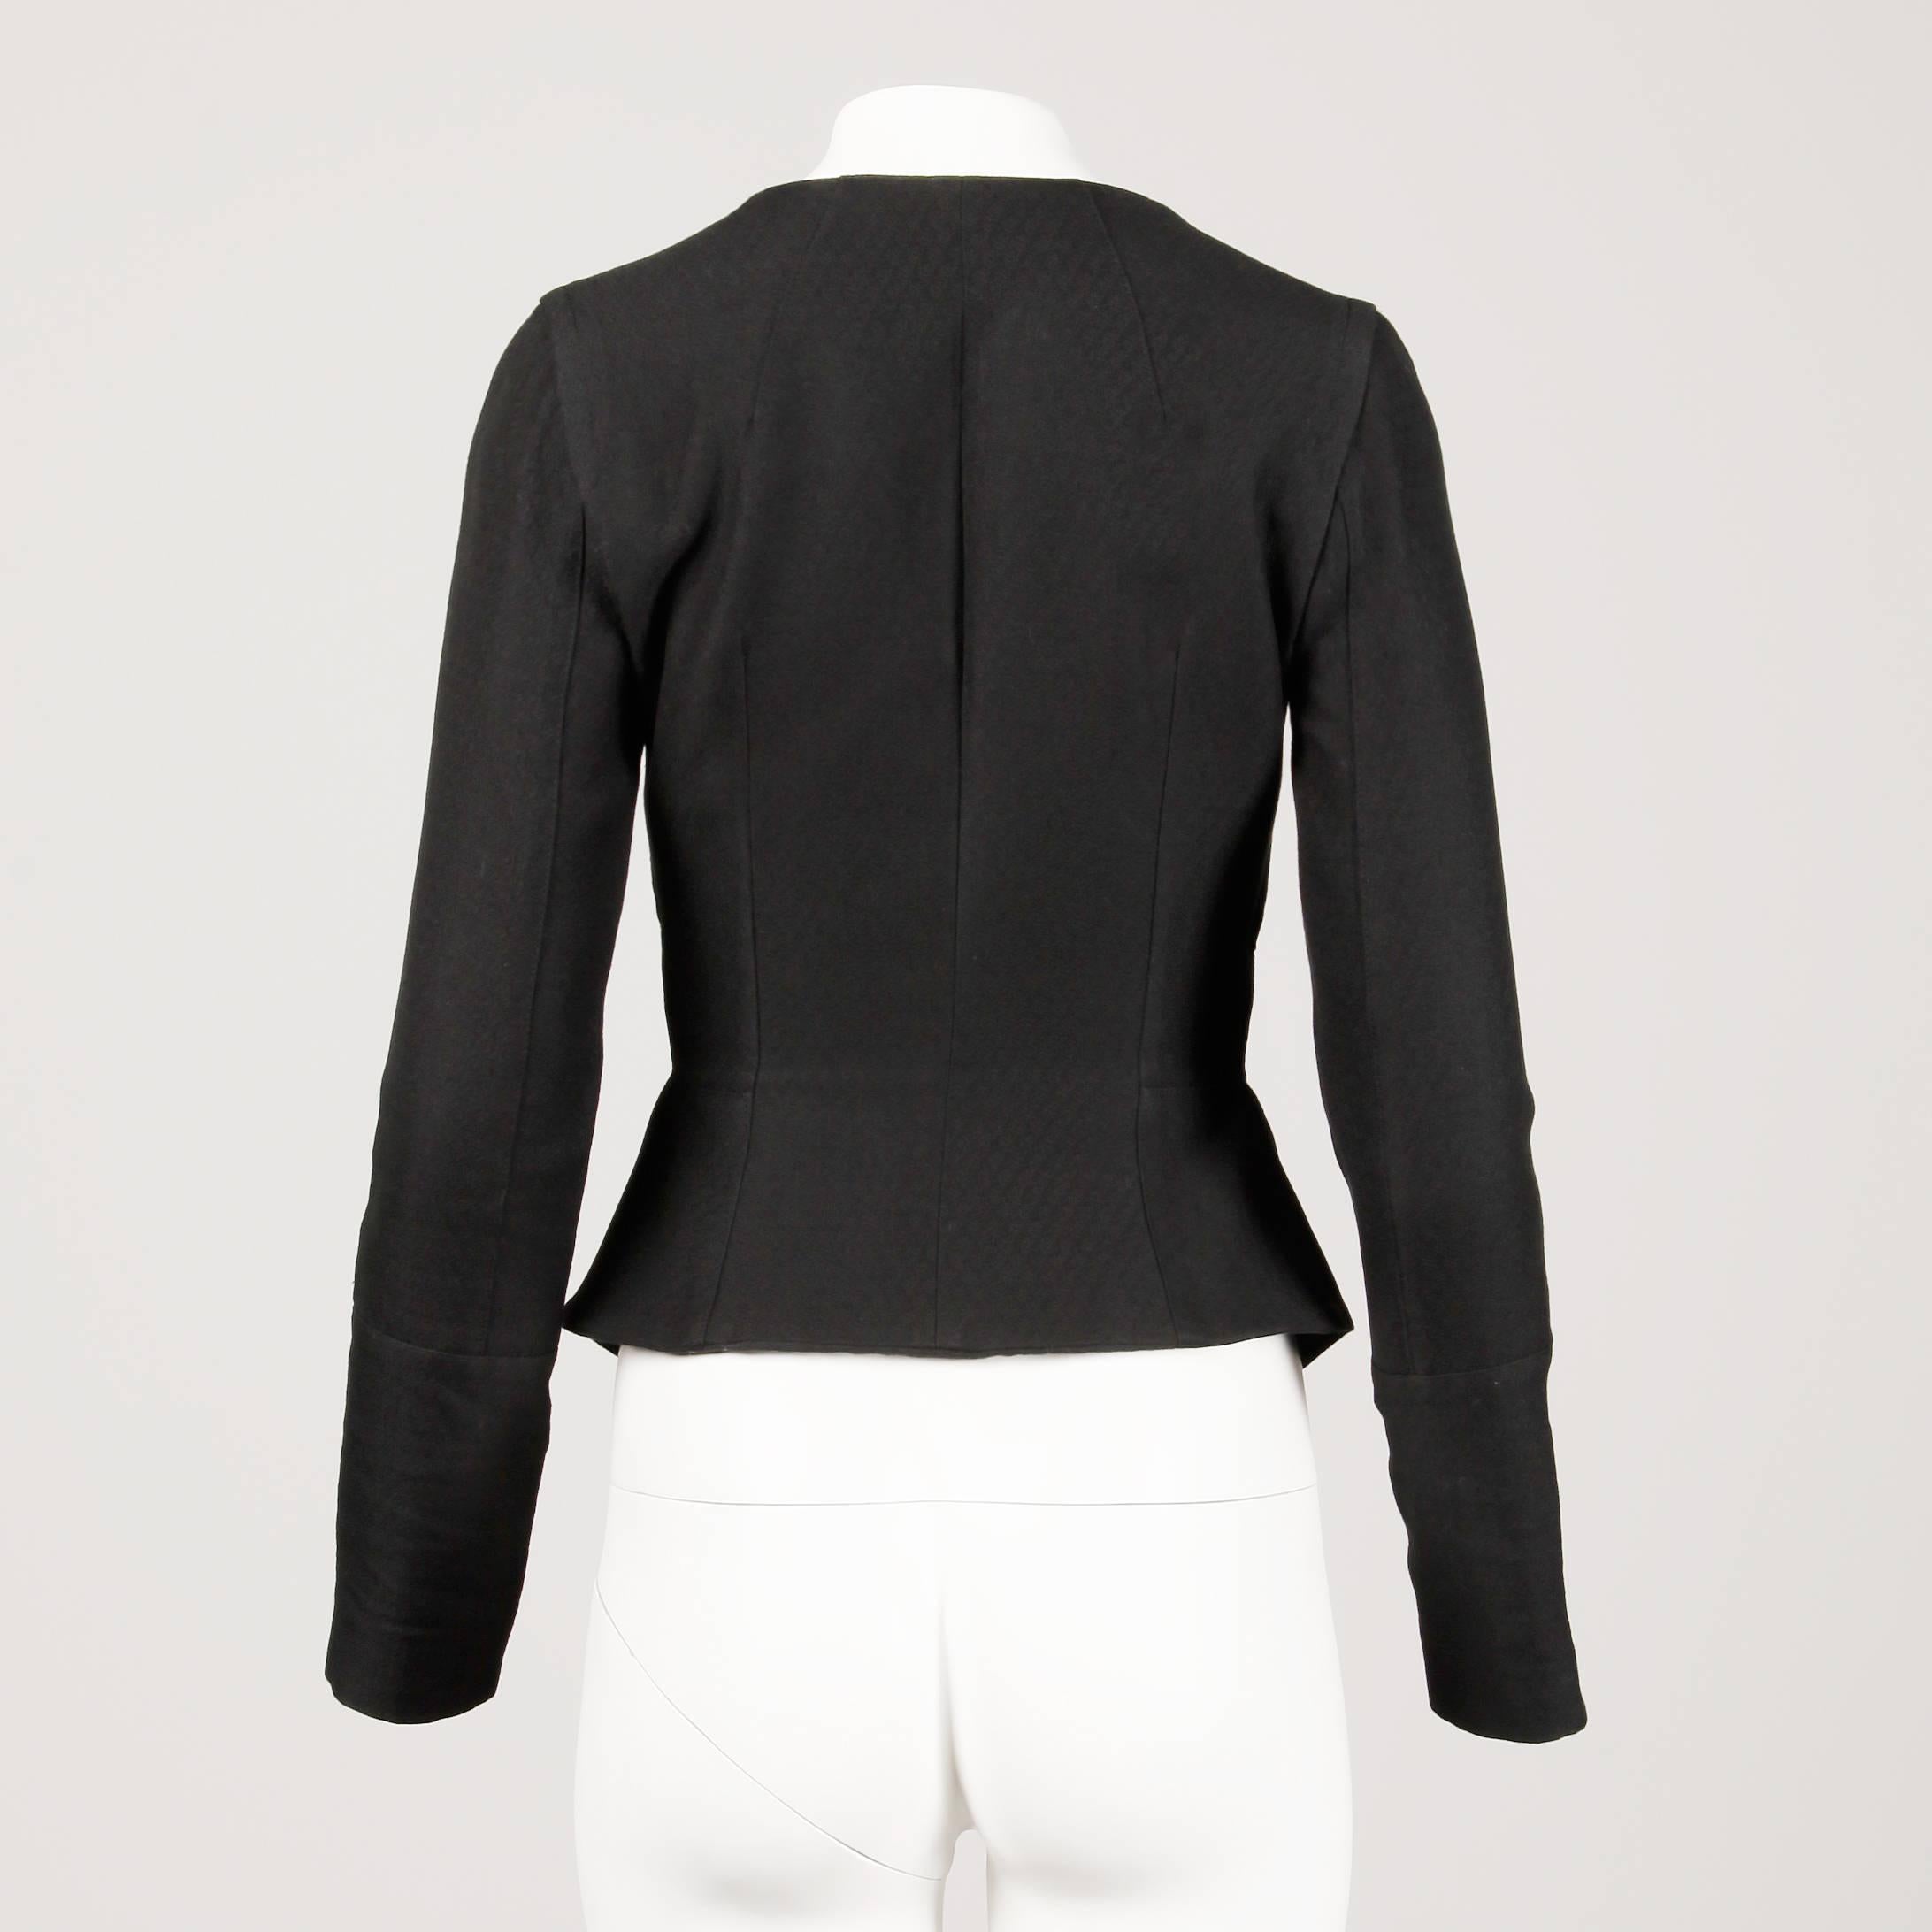 Alessandro Dell'acqua Black Avant Garde Blazer Jacket In Excellent Condition For Sale In Sparks, NV